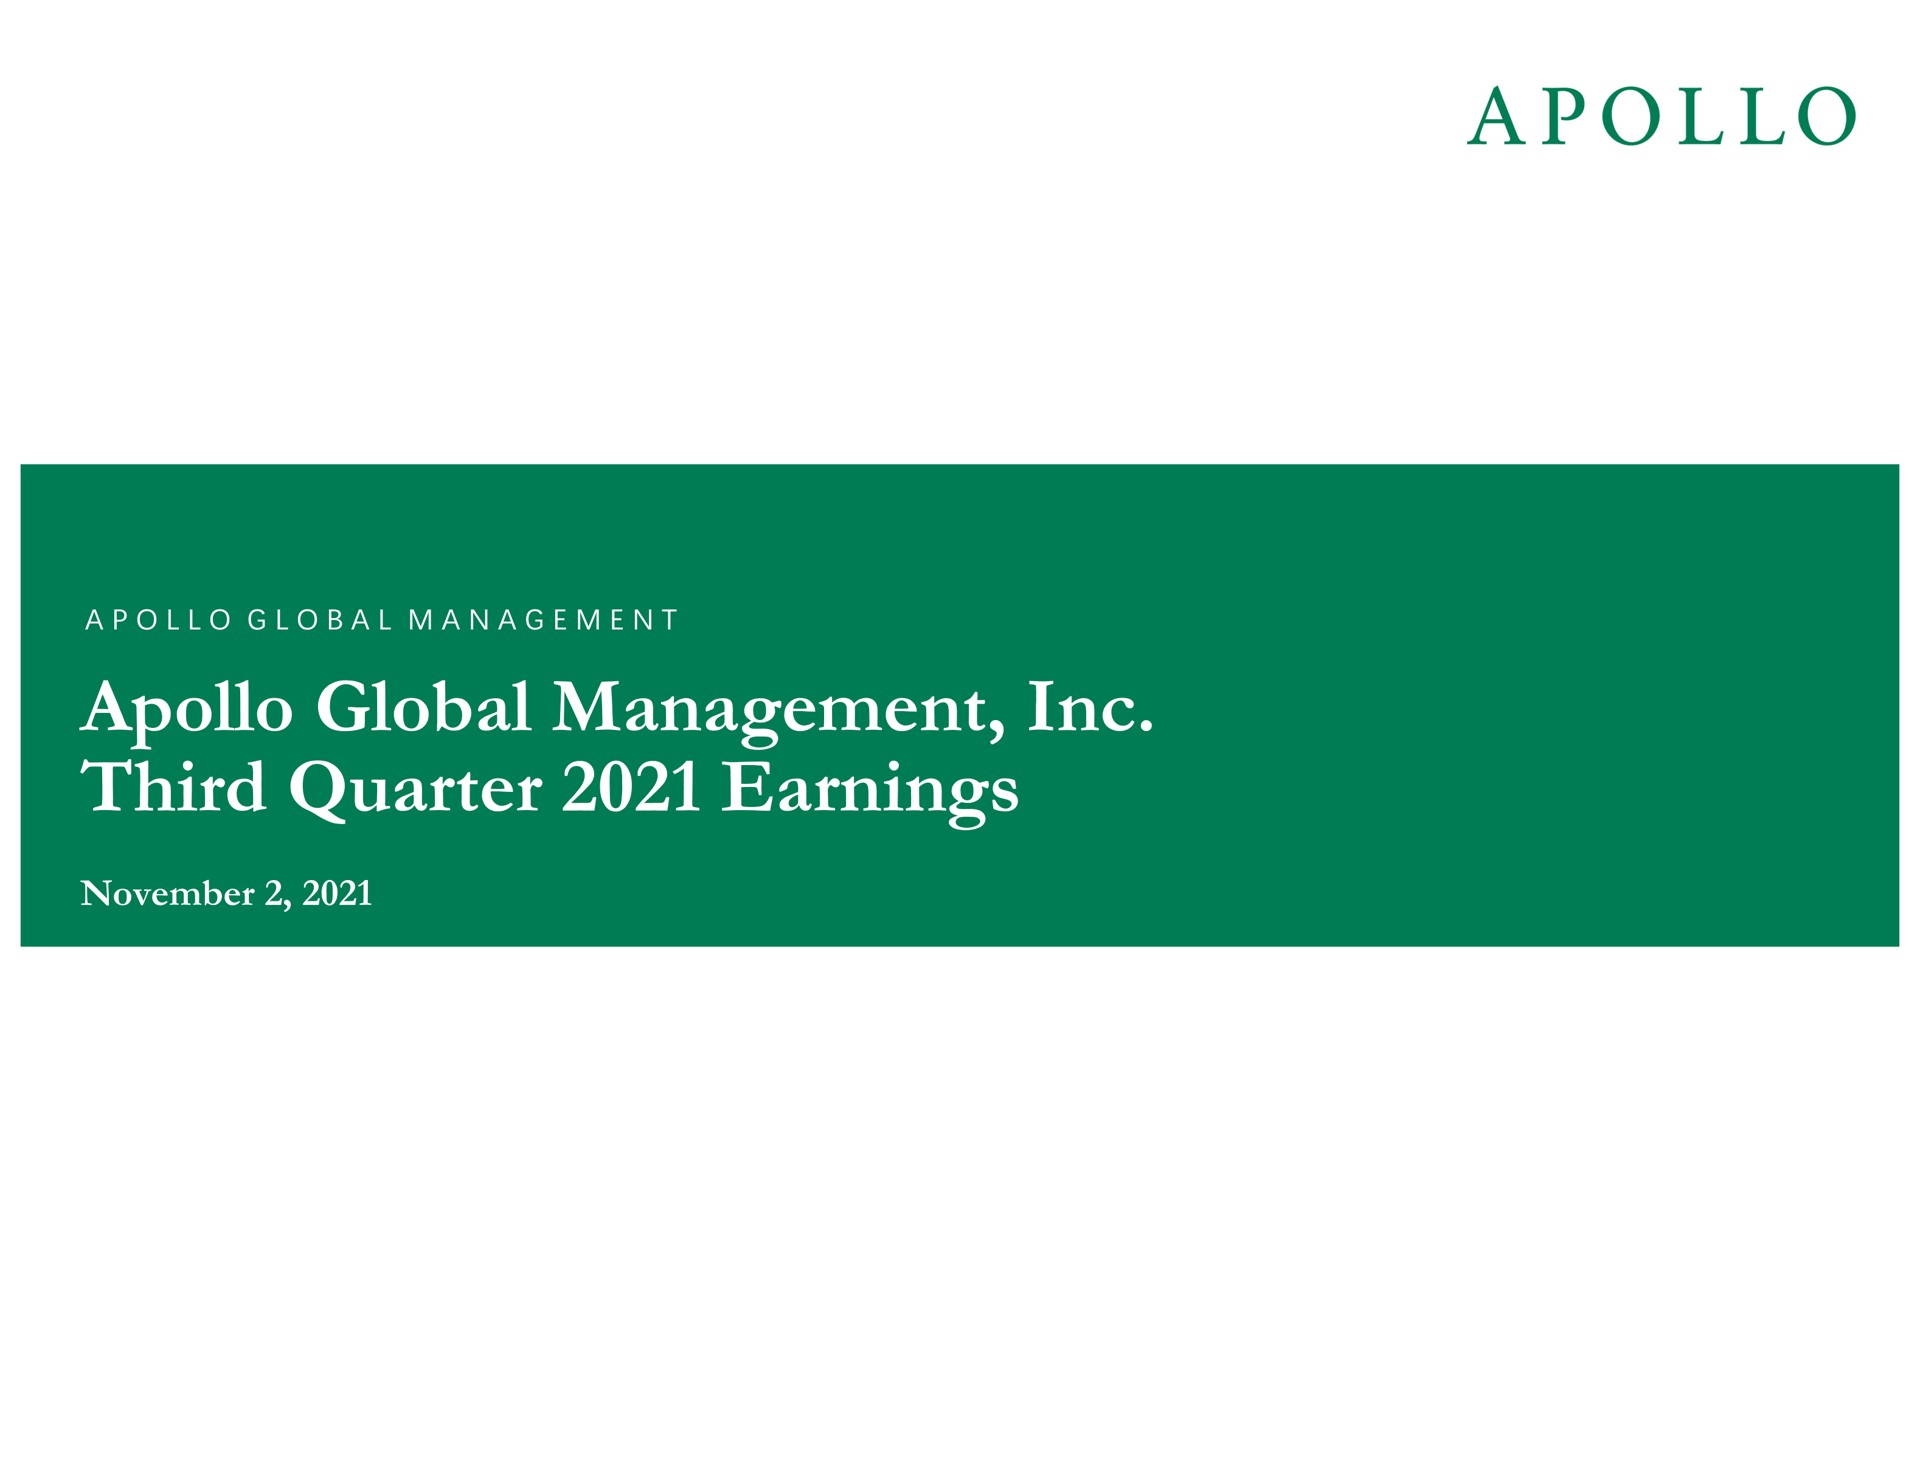 global management third quarter earnings | Apollo Global Management